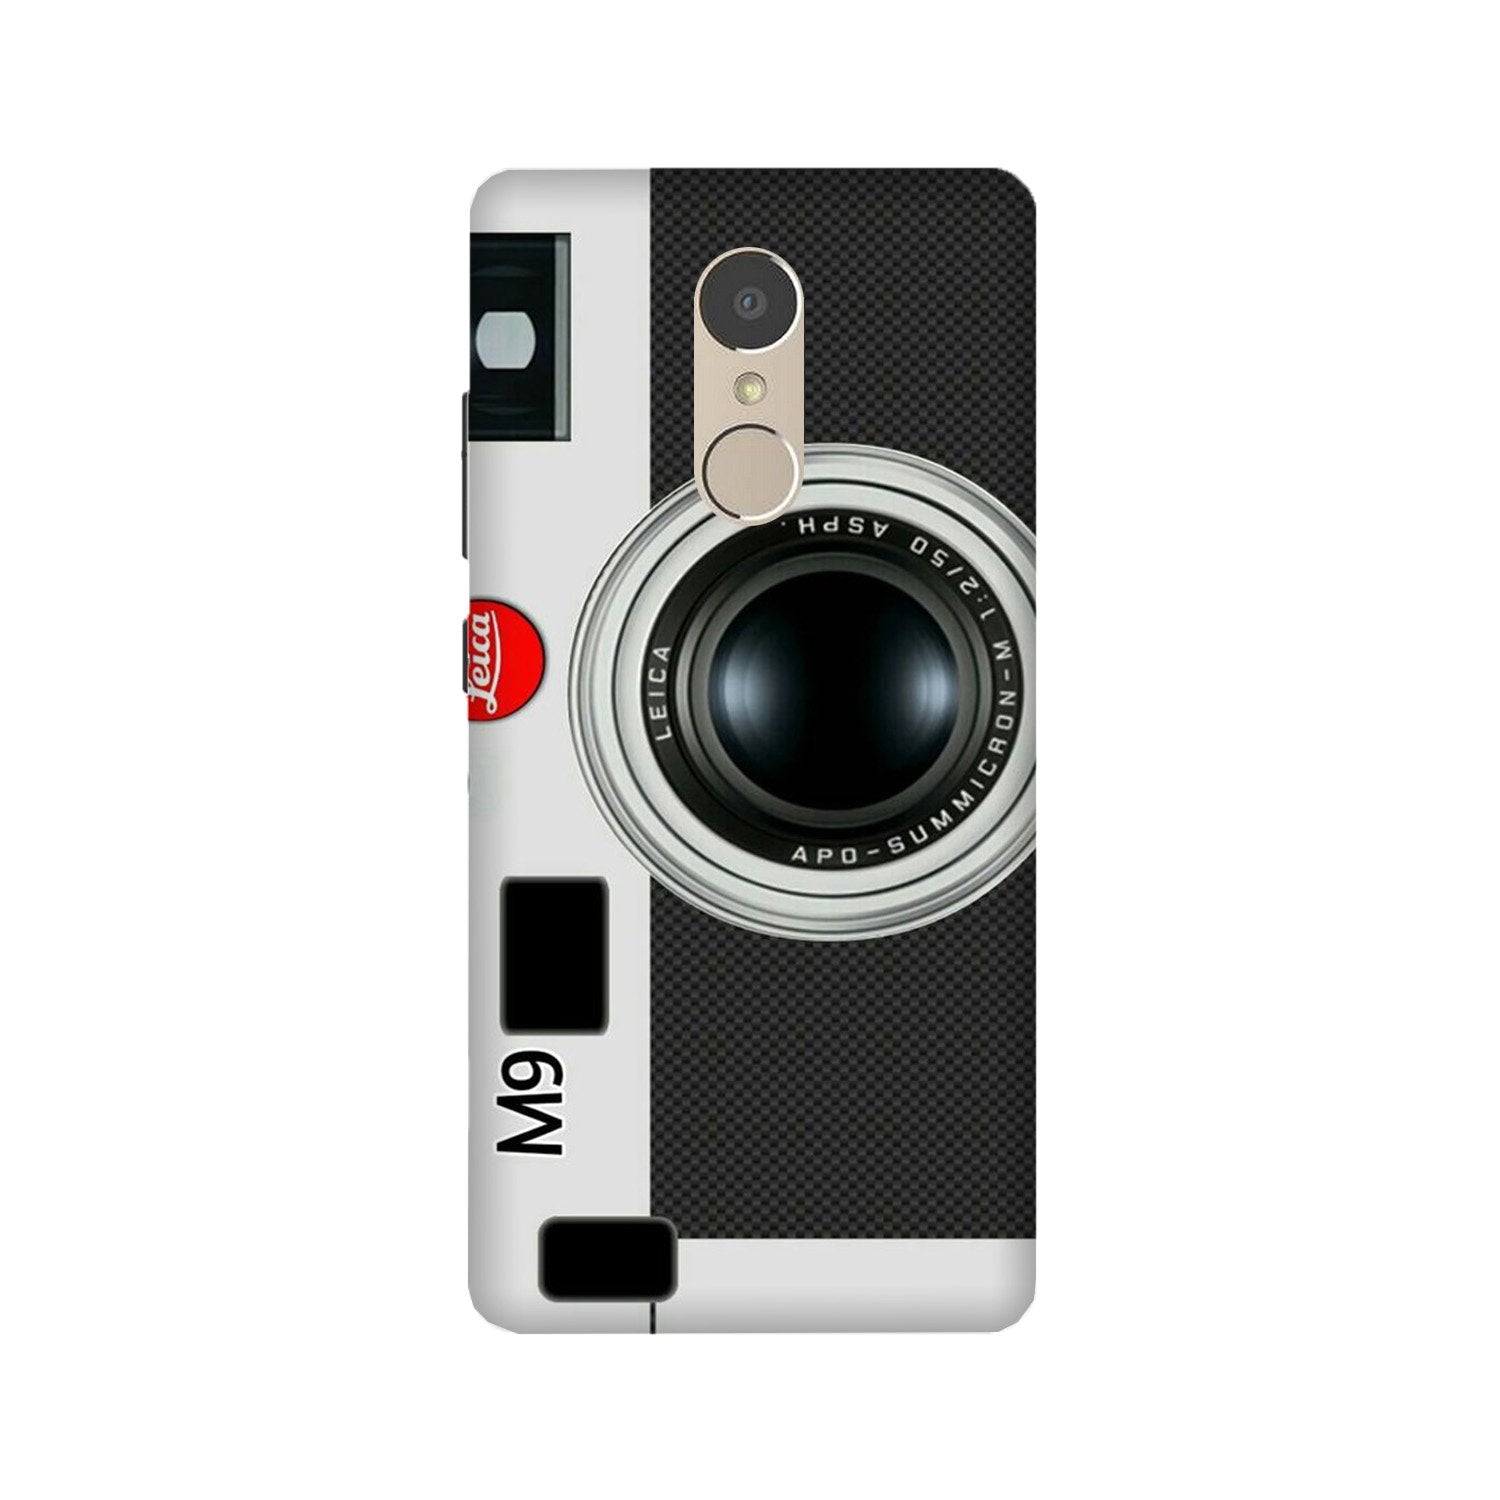 Camera Case for Lenovo K6 Note (Design No. 257)